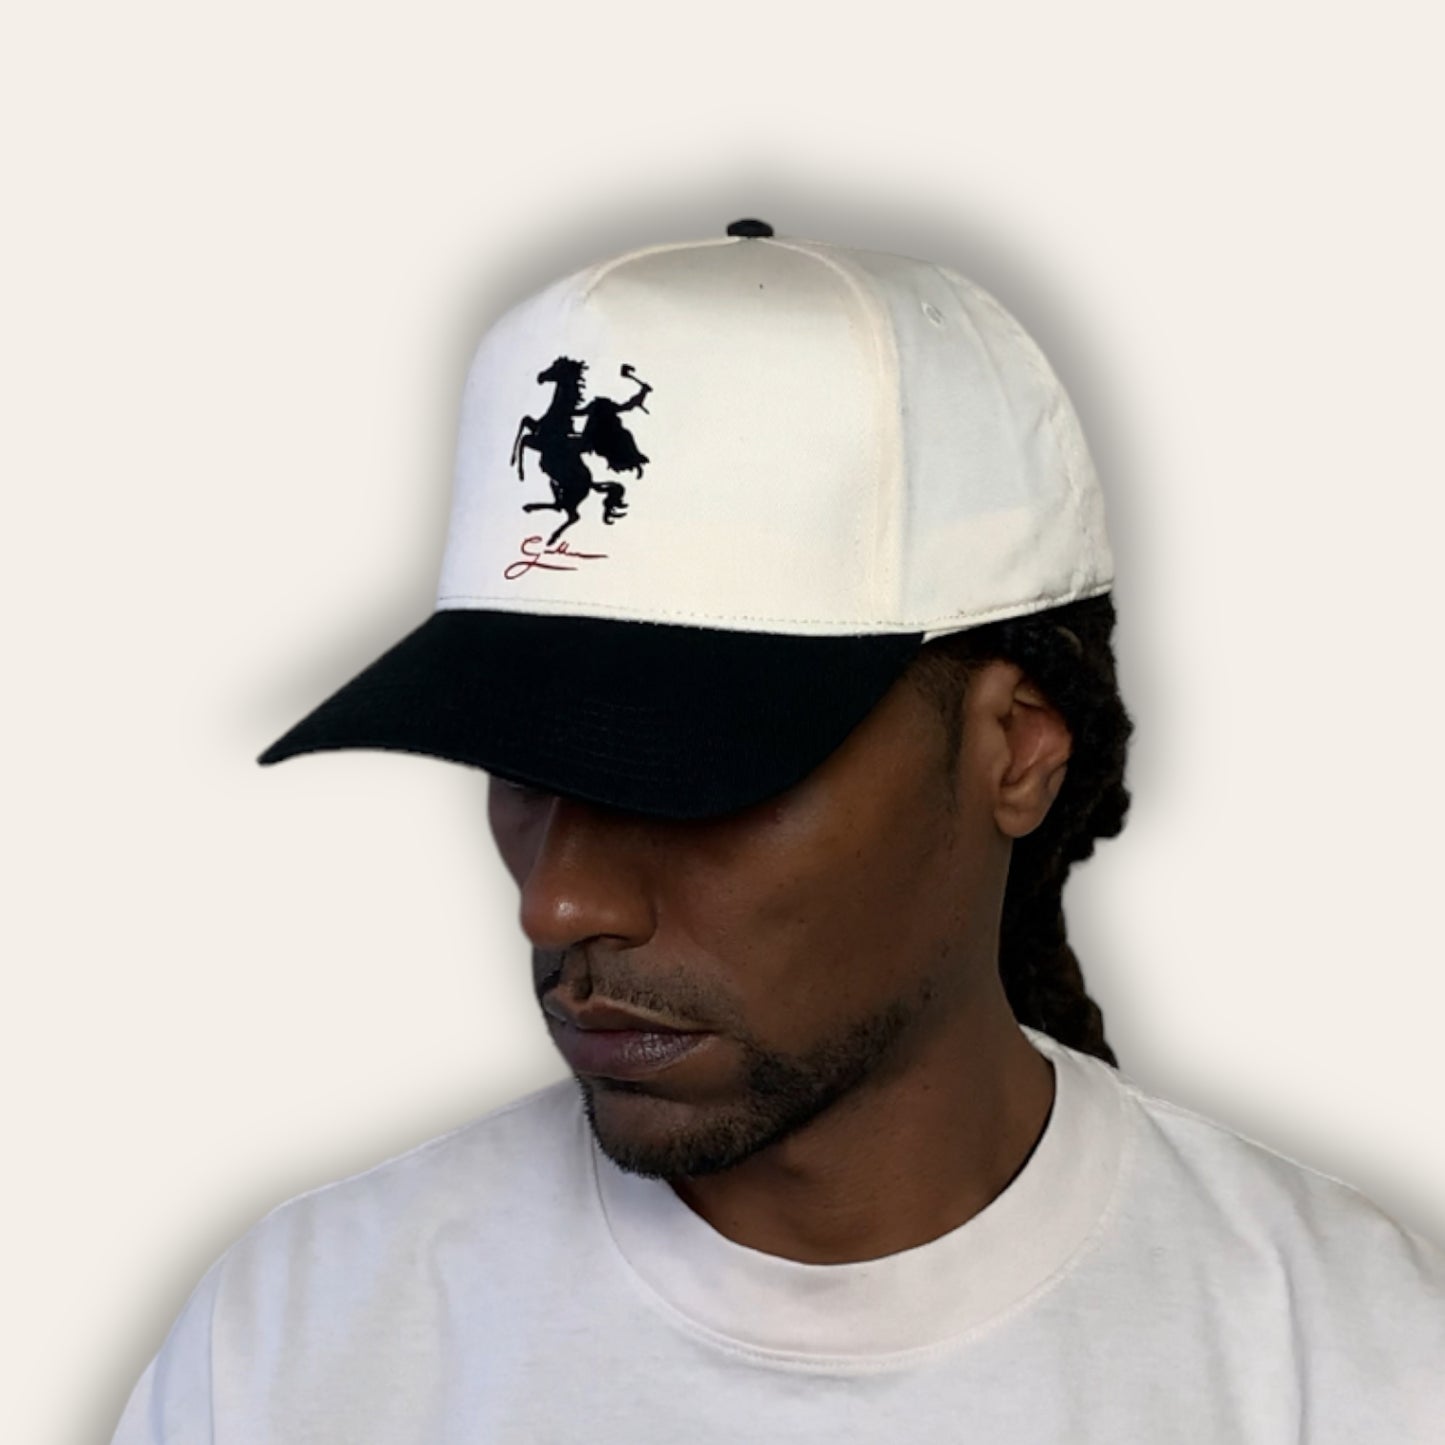 “Headless Horseman” Structured Hat